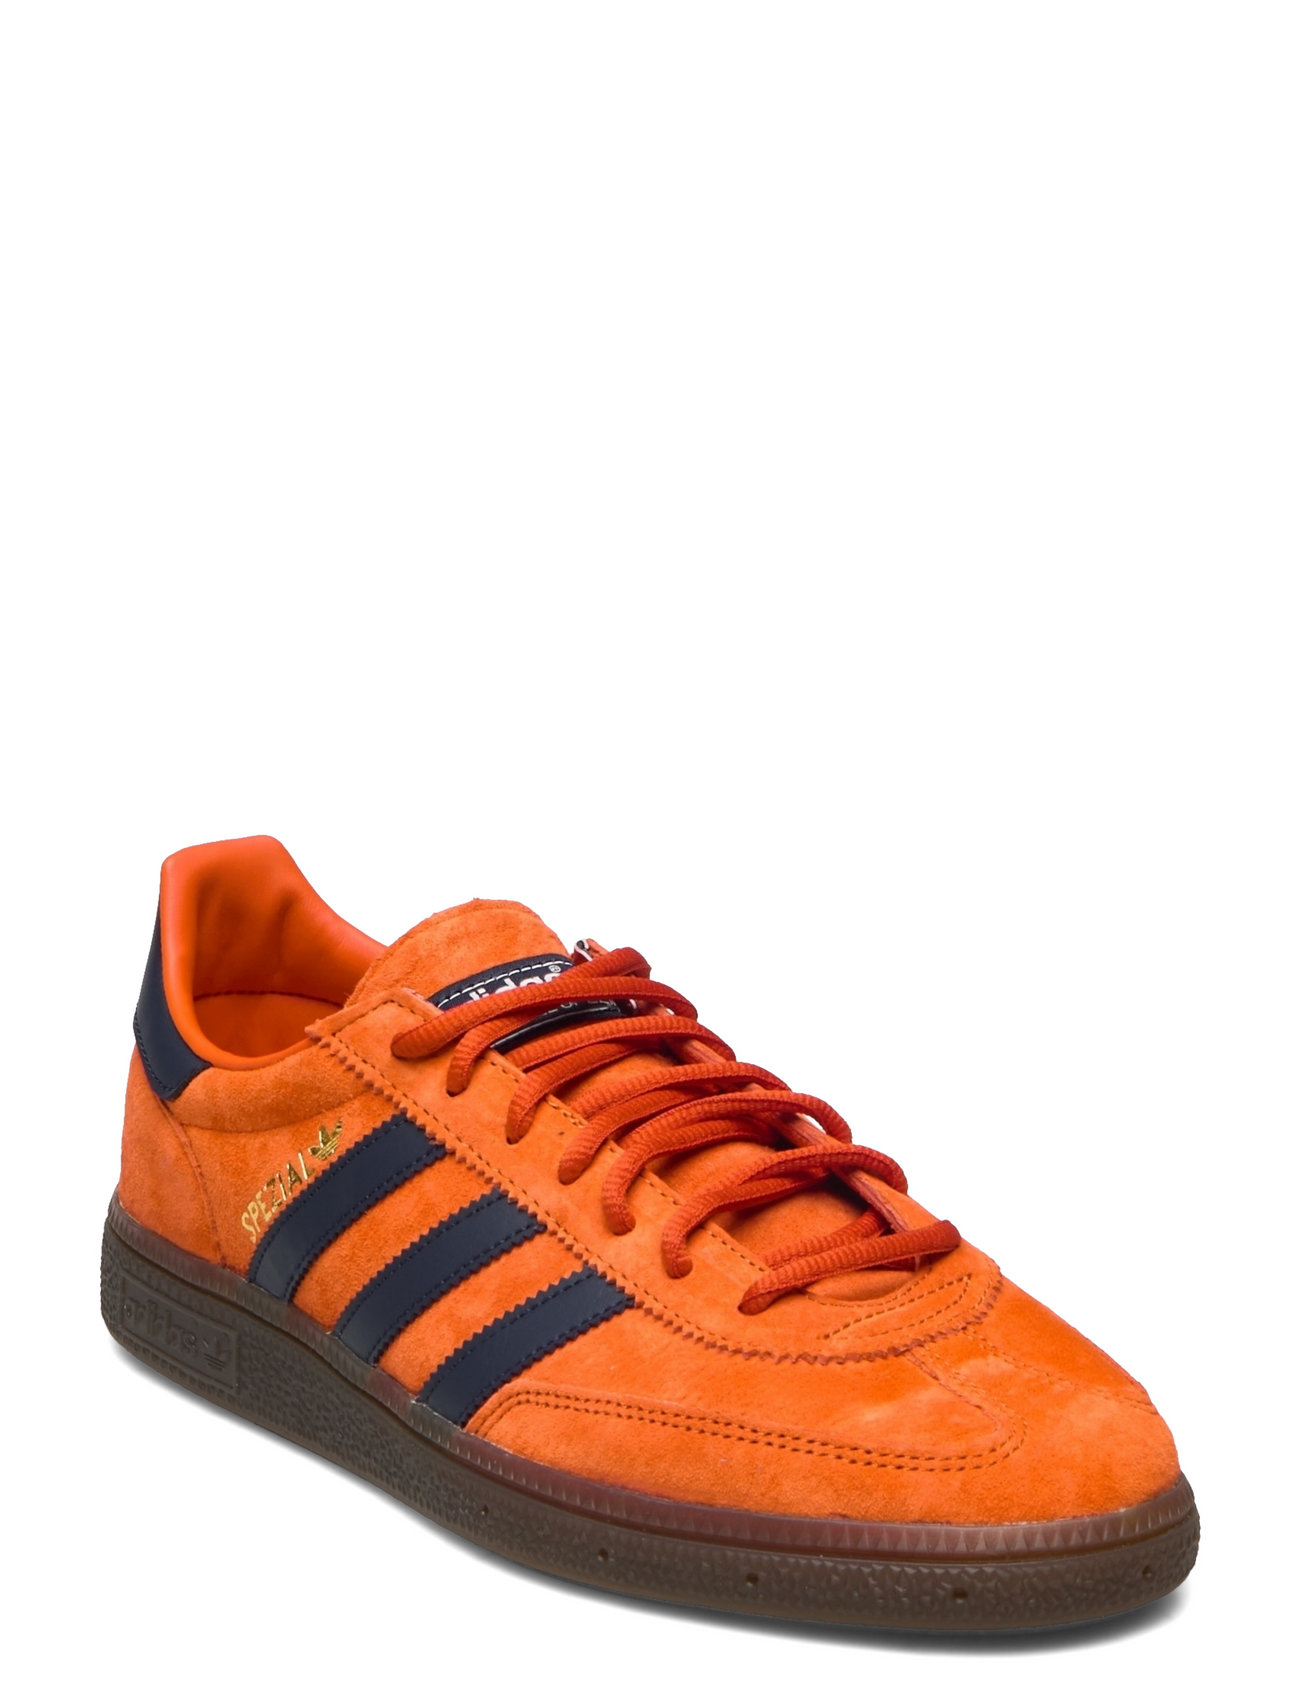 adidas Originals Handball Spezial Shoes - Niedriger Schnitt